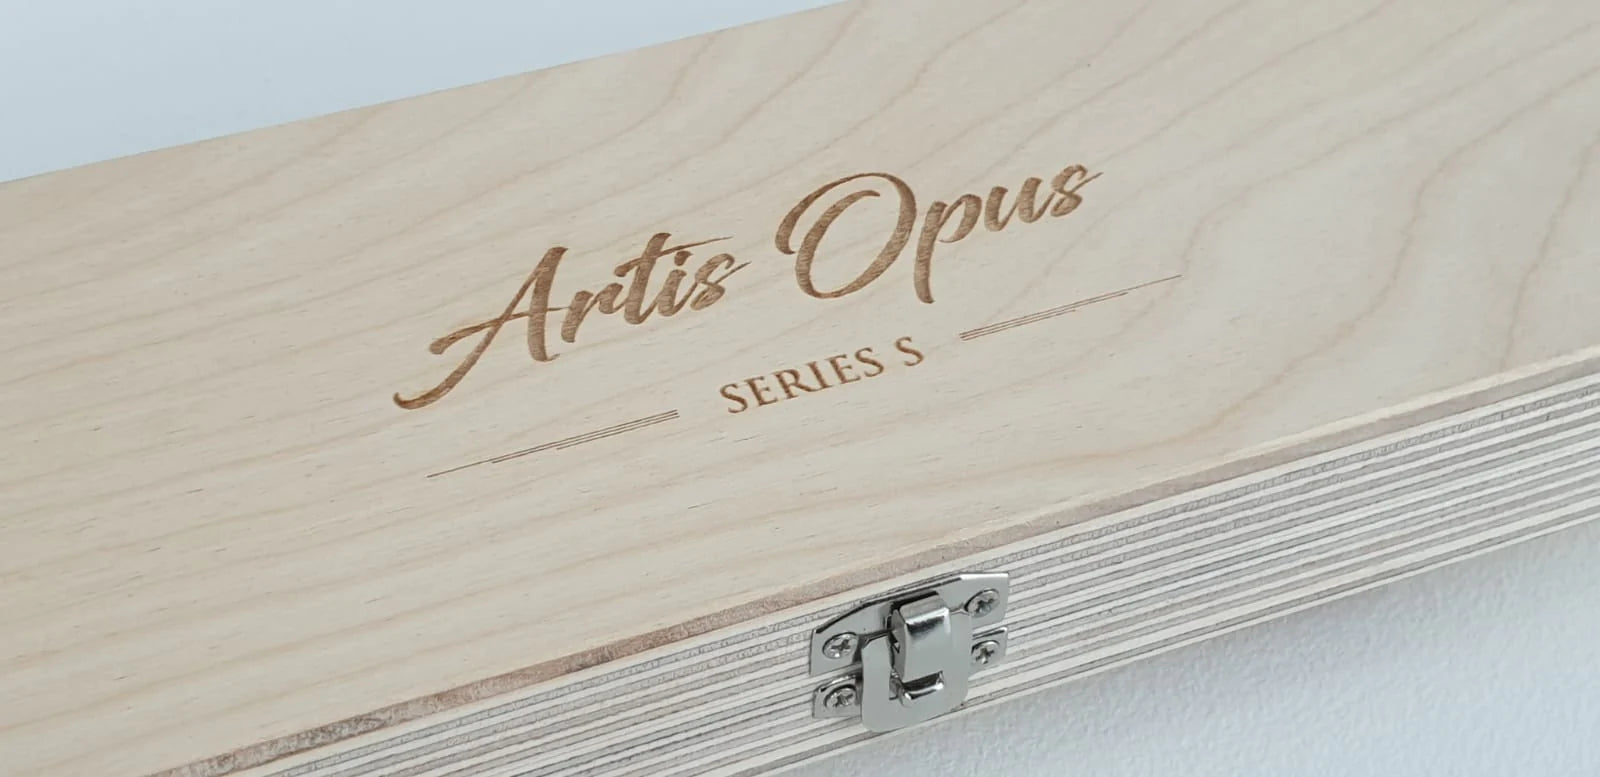 Artis Opus Series S 4 Brush Set